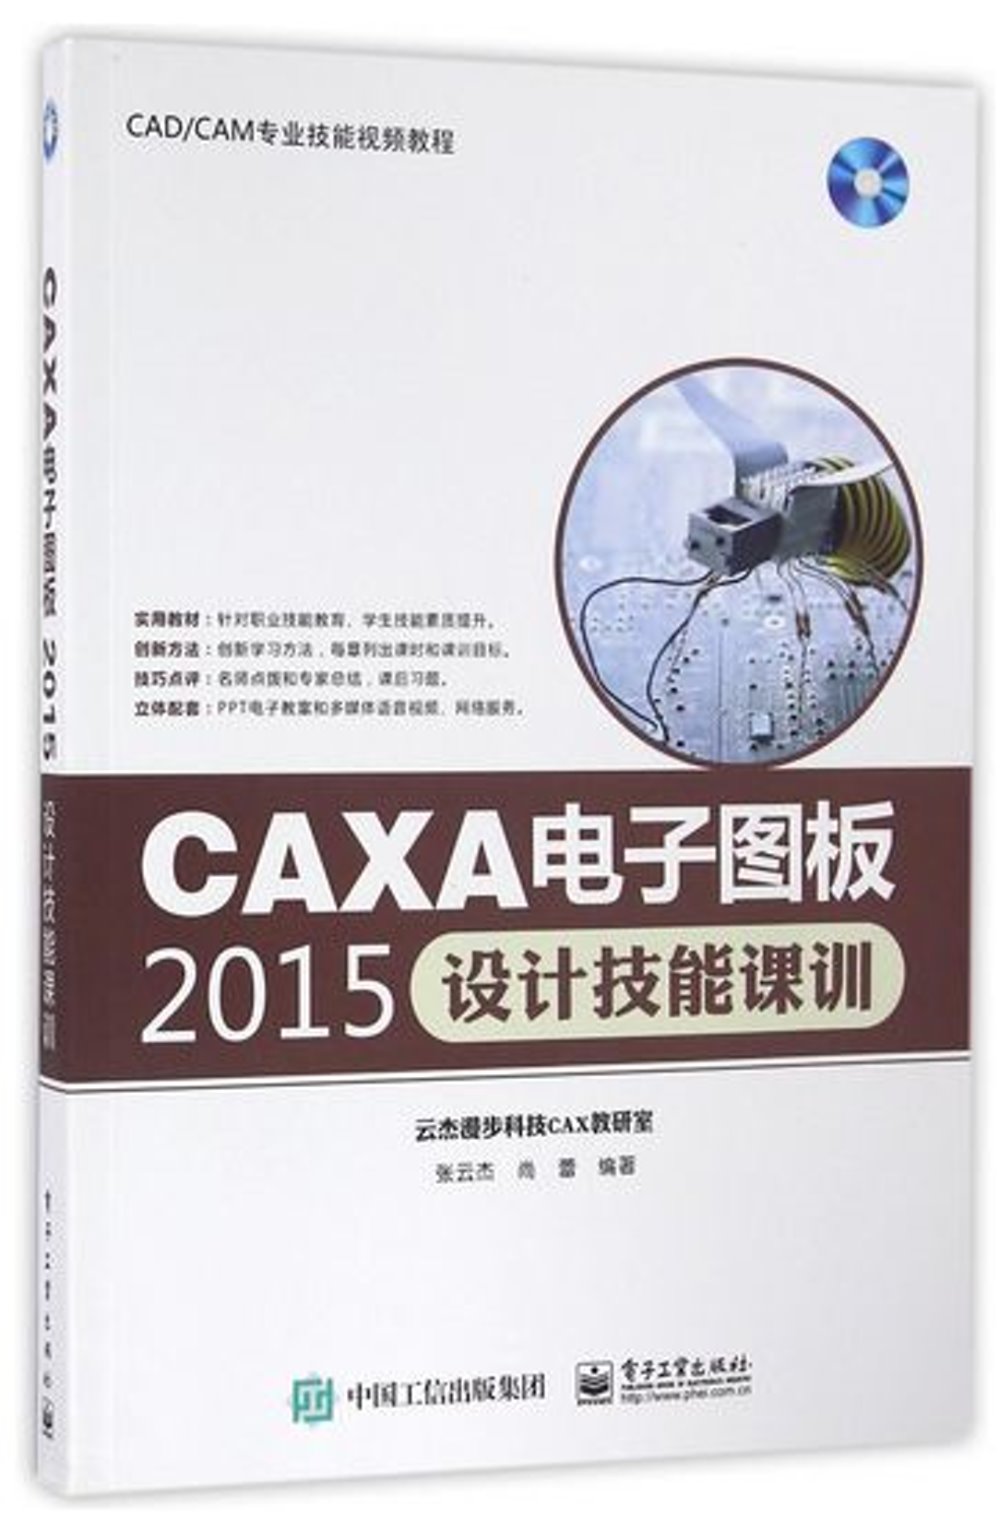 CAXA電子圖板2015設計技能課訓